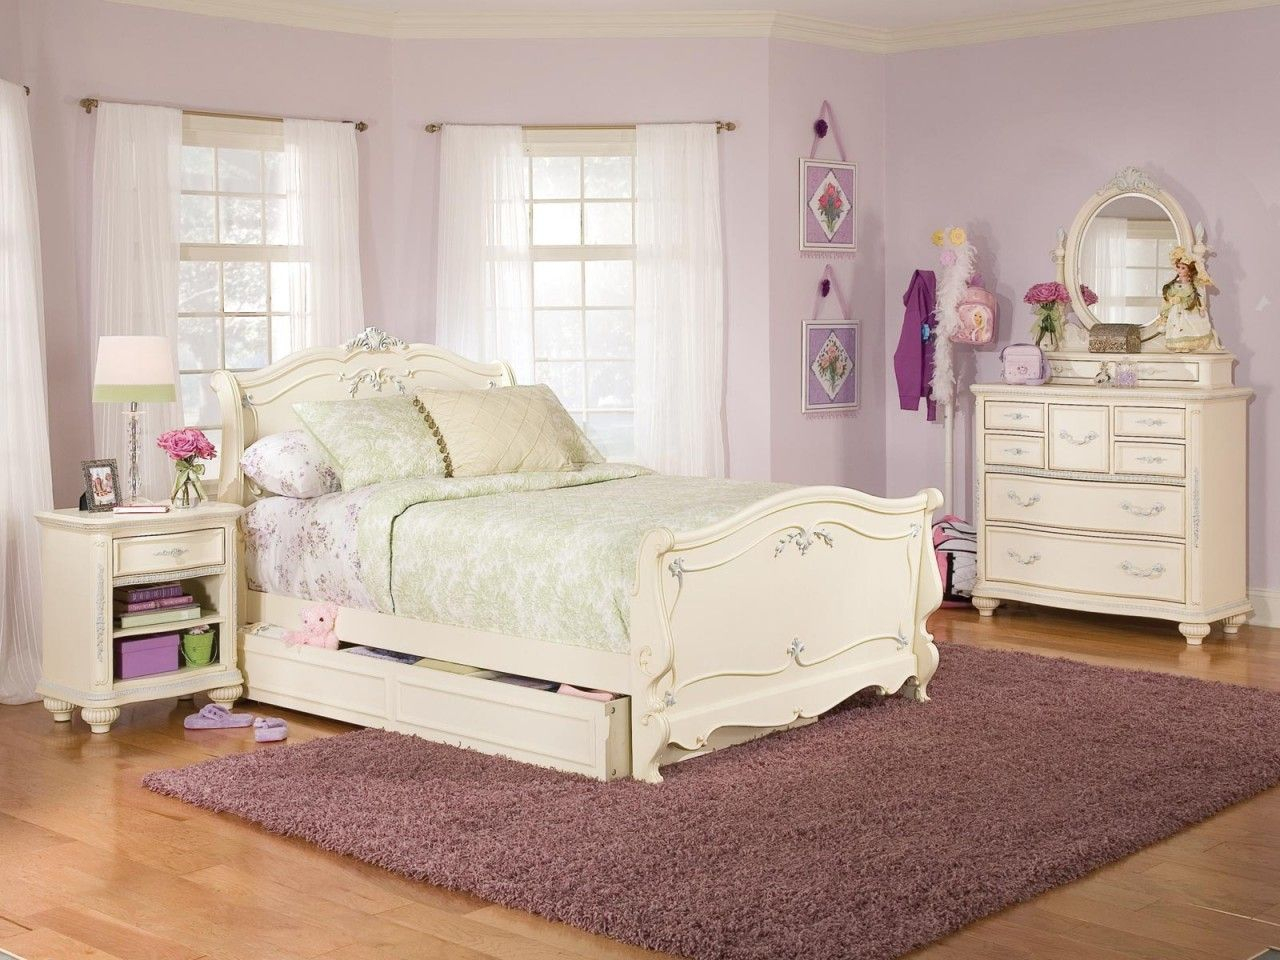 Girls Bedroom Furniture Sets Girls Black Bedroom Set Kids Twin Bed with regard to size 1280 X 960